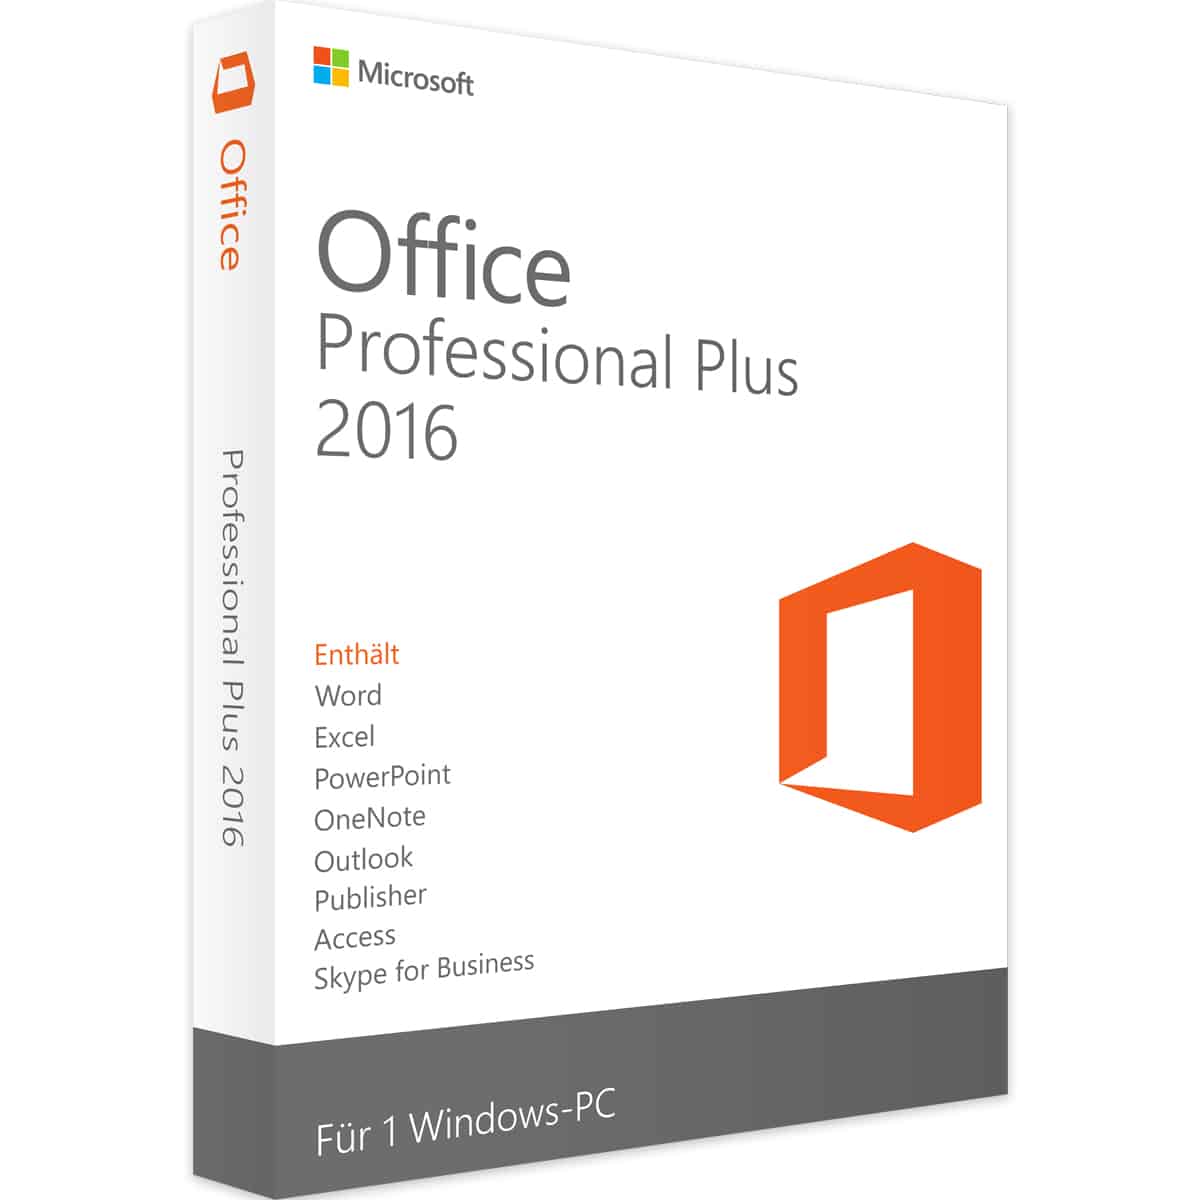 Microsoft Office 2016 Professional Plus Lifetime License